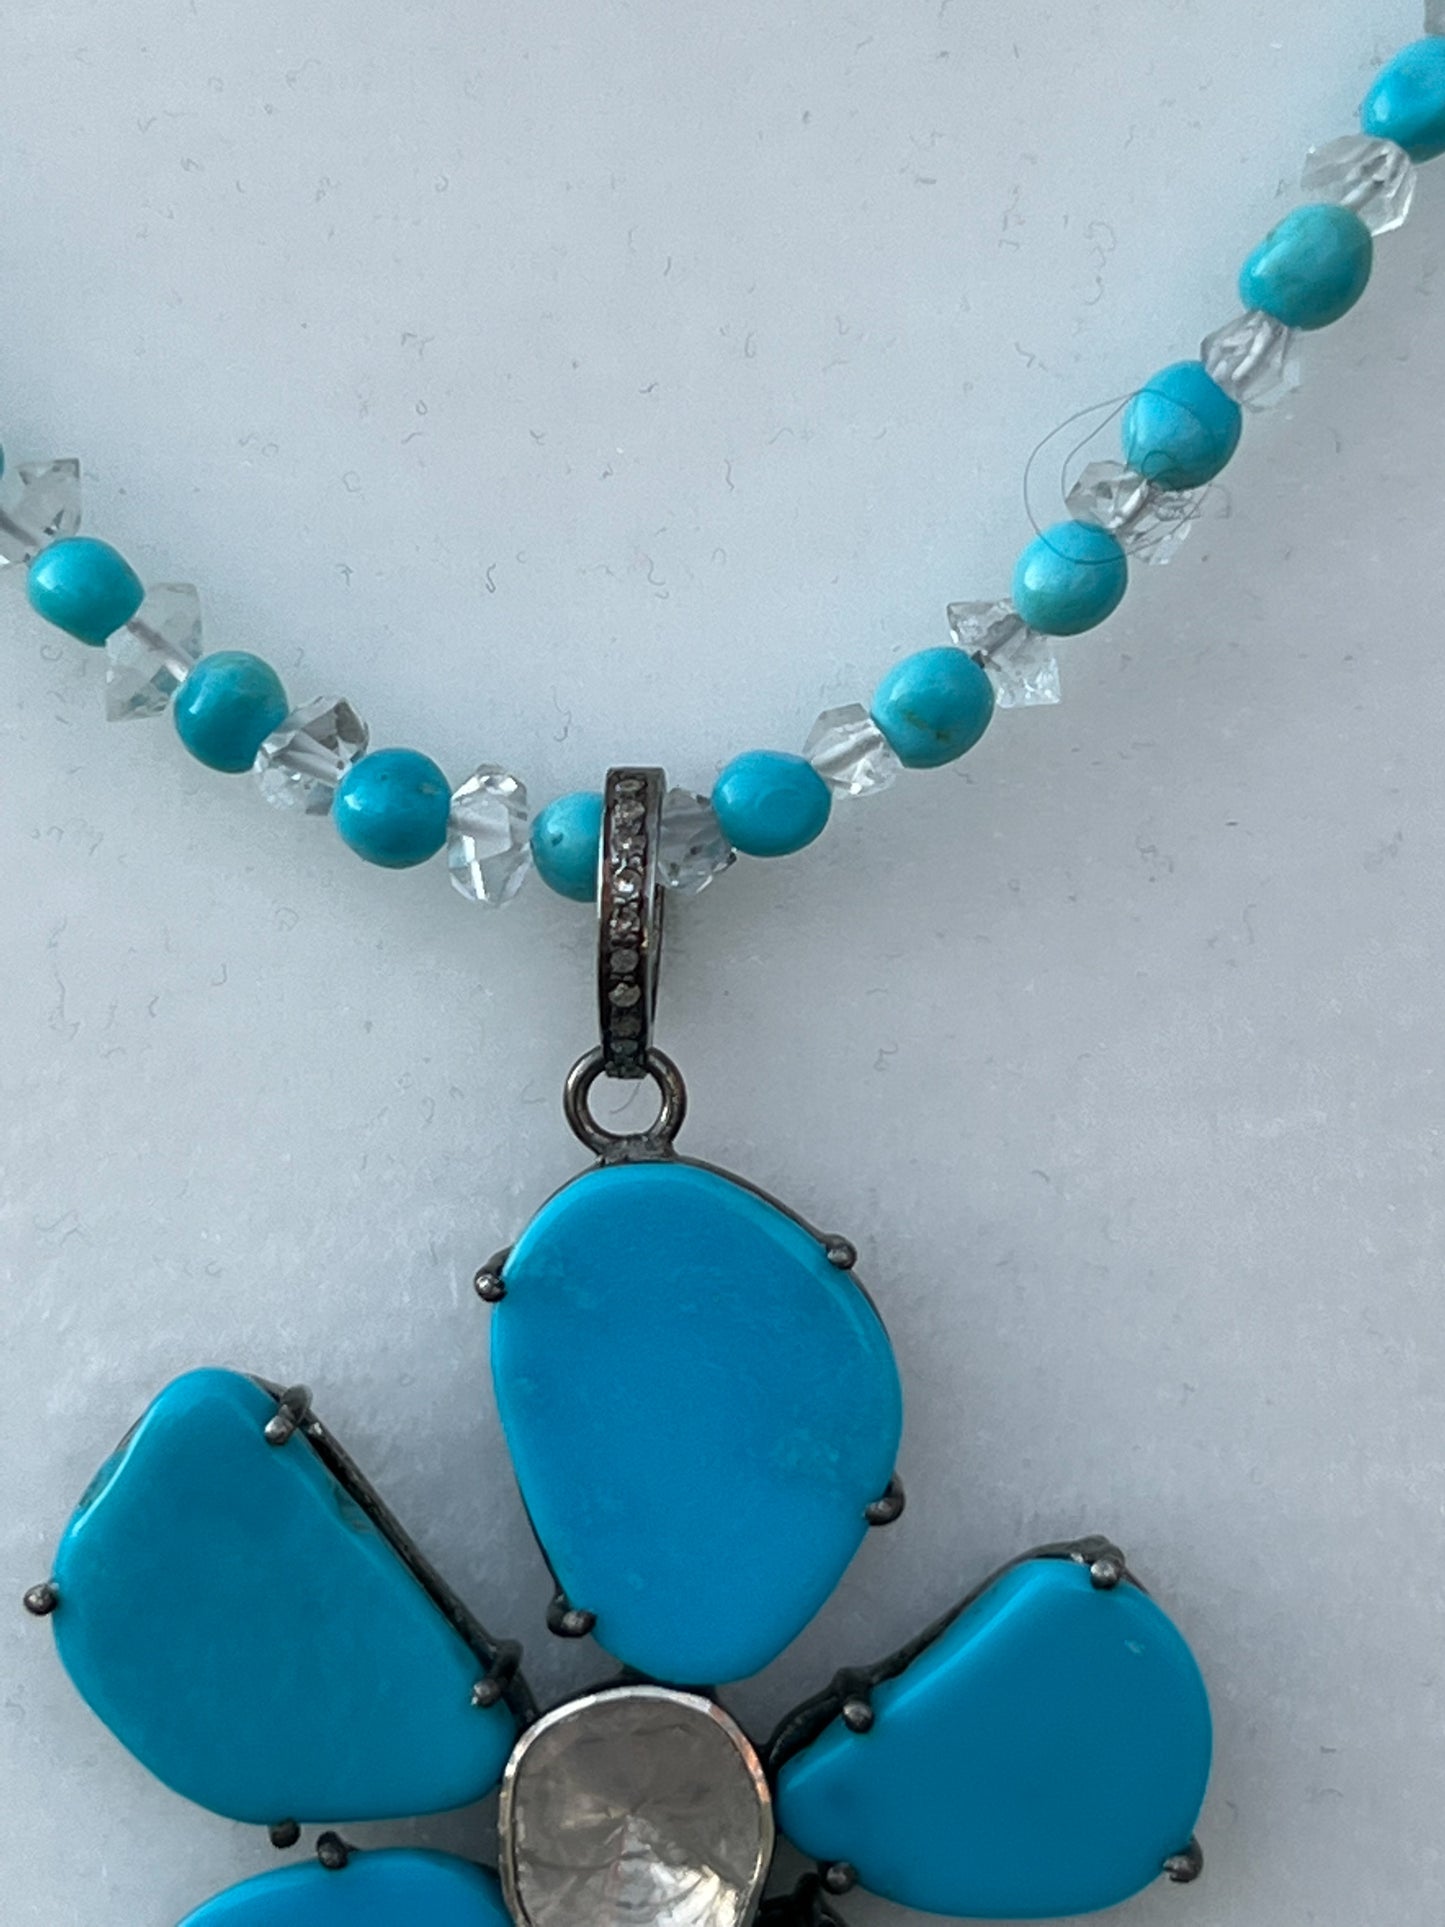 Sleeping Beauty Turquoise and Diamond Necklace